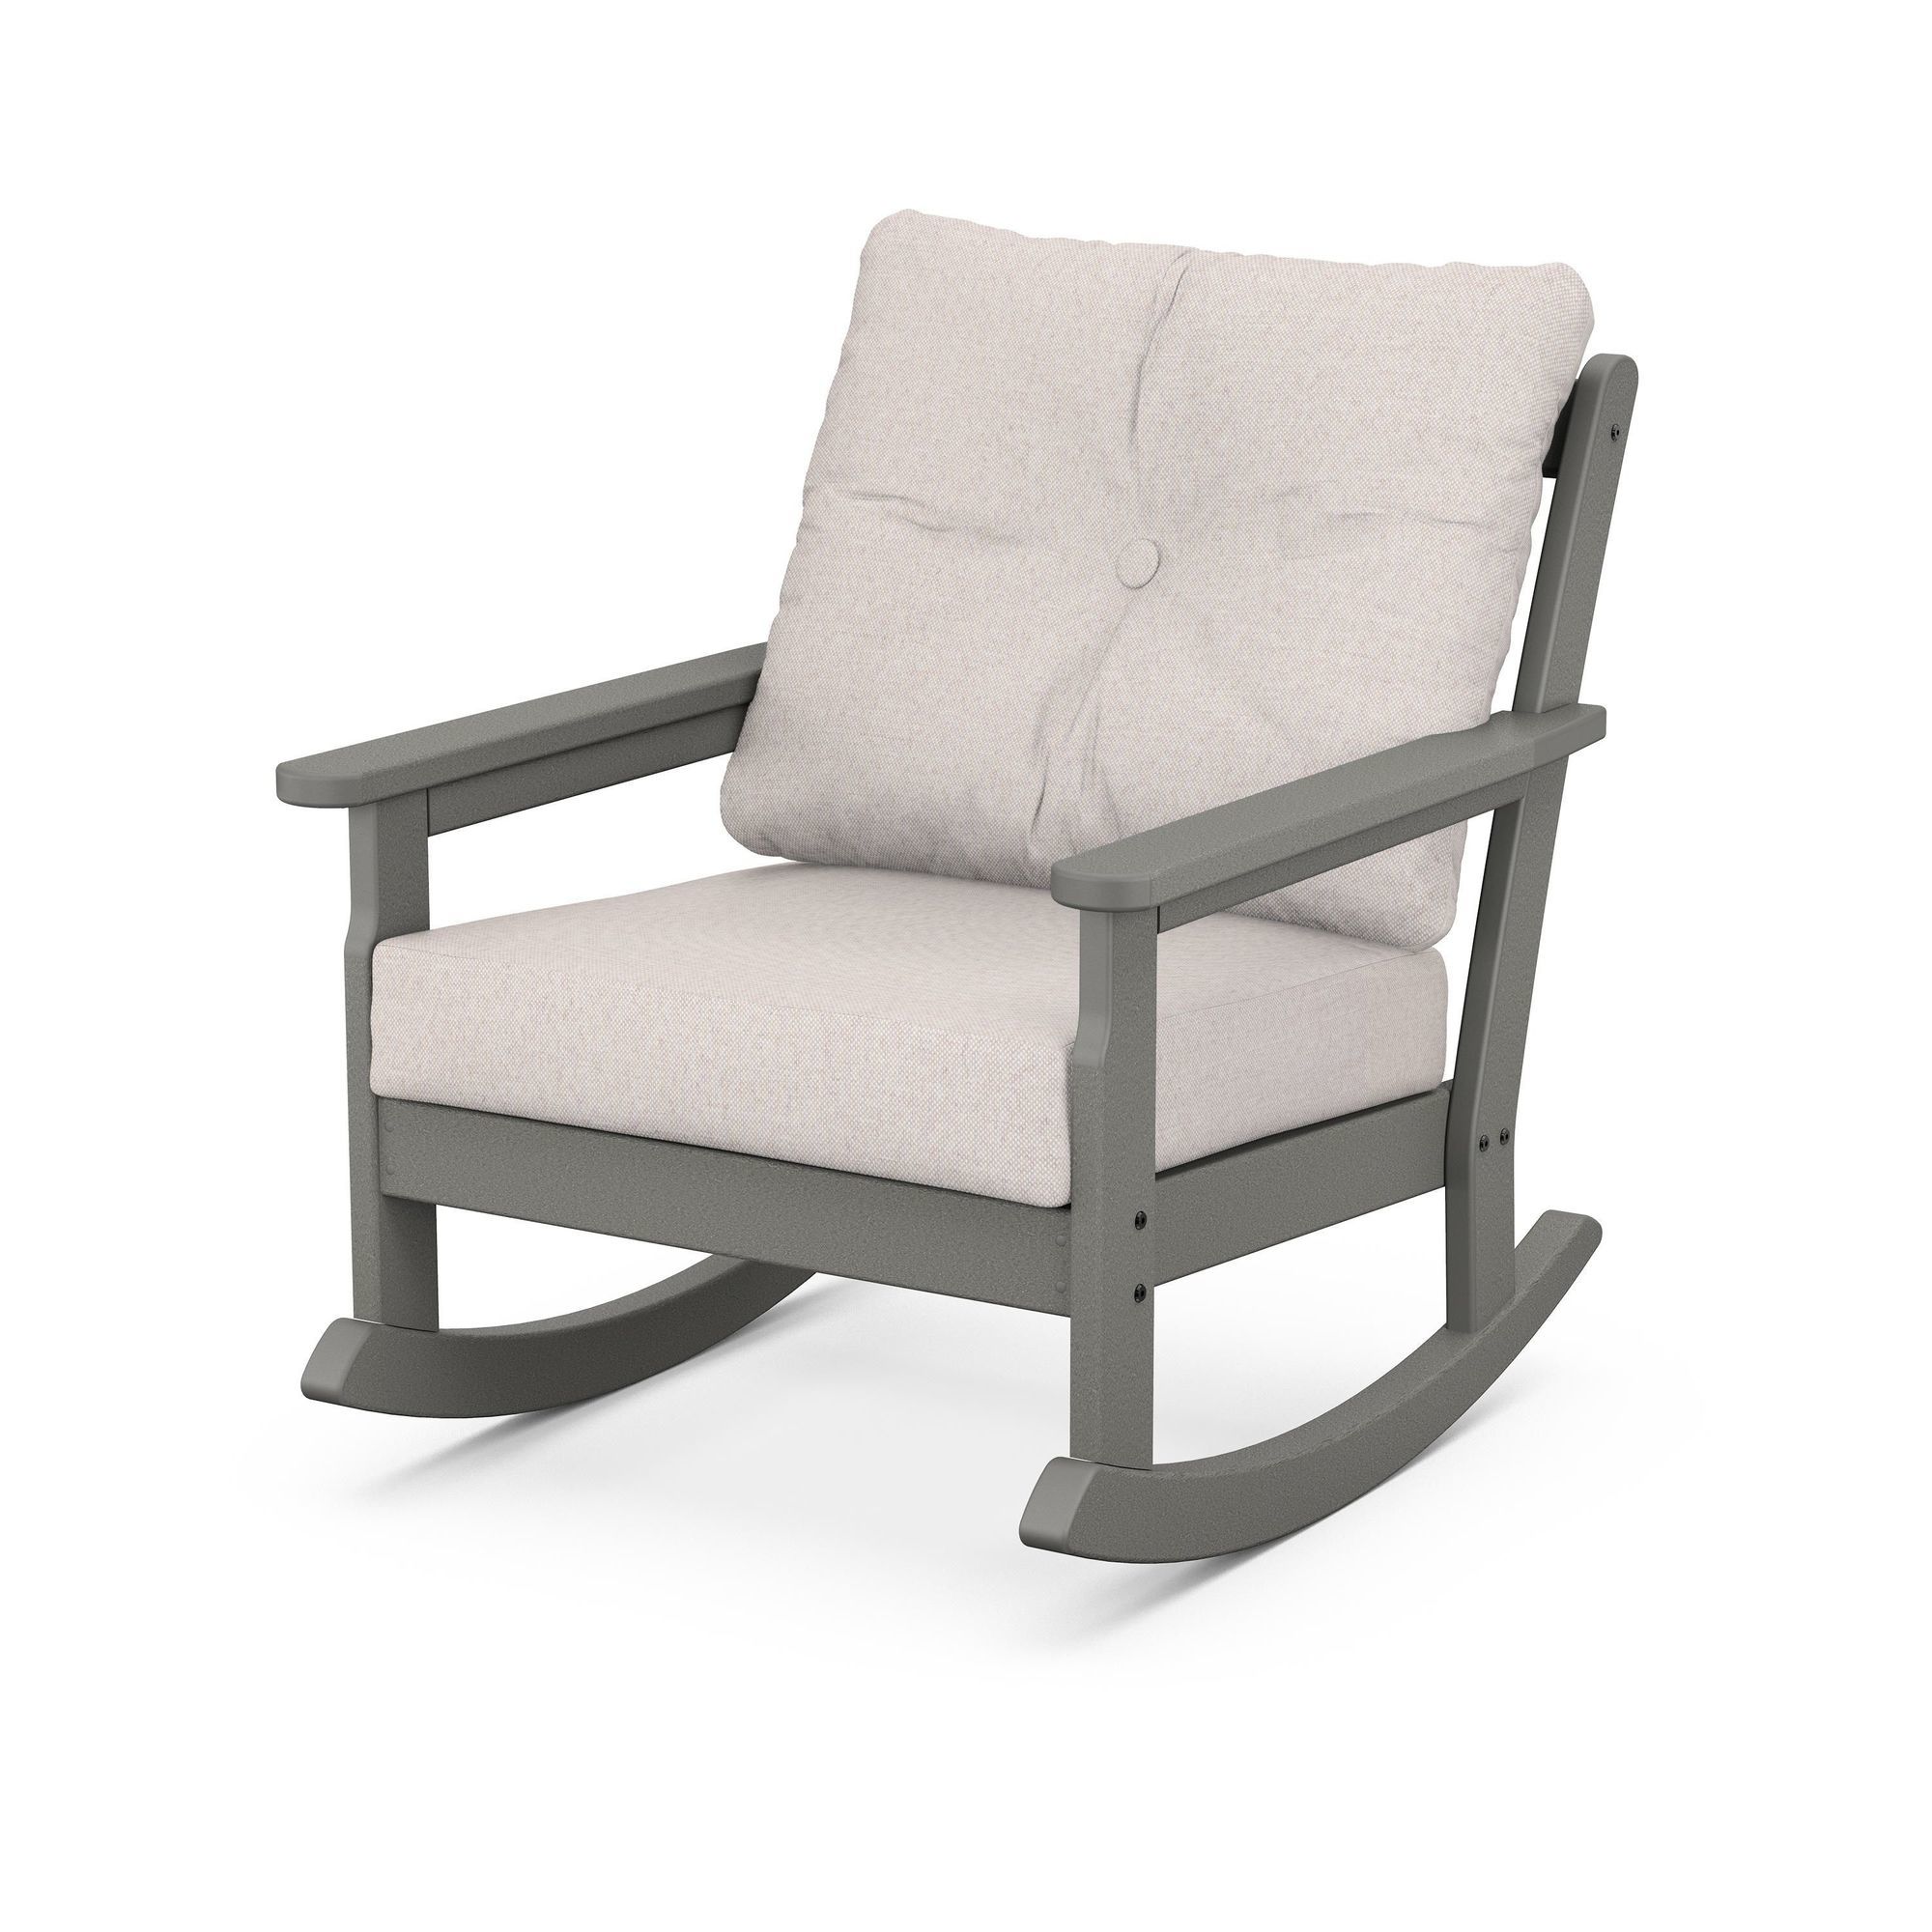 POLYWOOD® Vineyard Porch Rocking Chair Seat Replacement Cushion